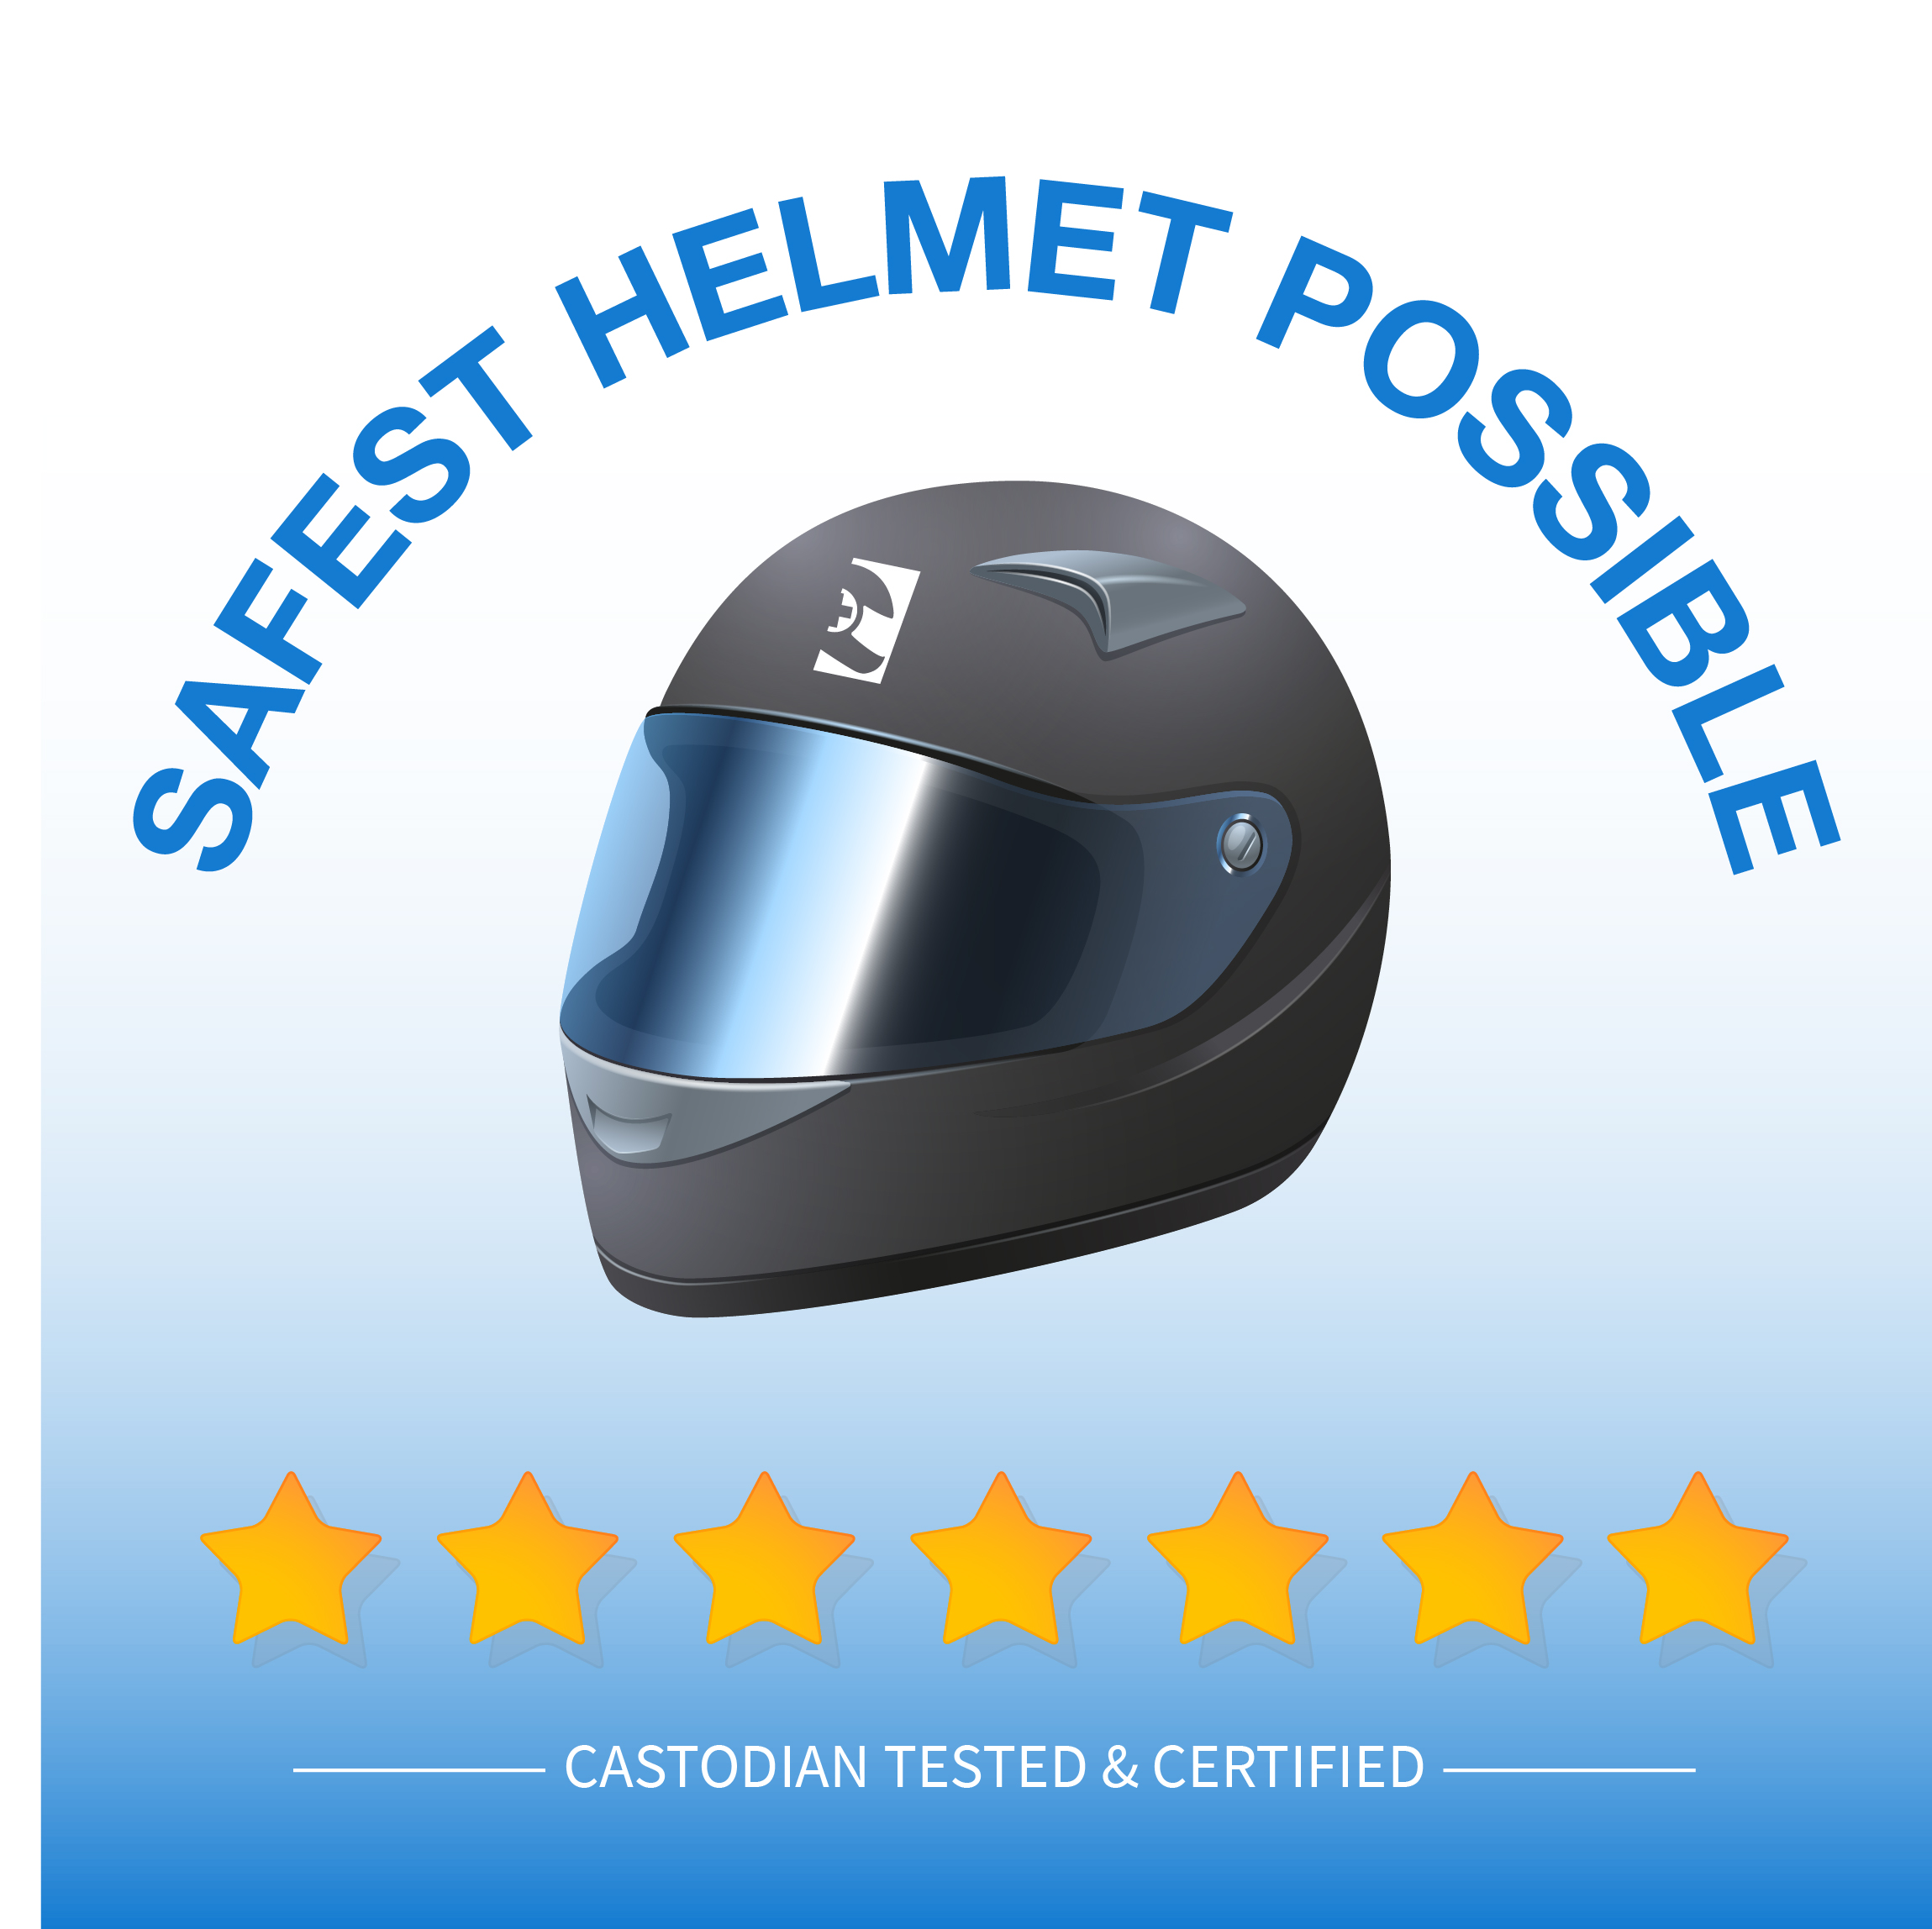 Safest helmet possible | www.castodian.org